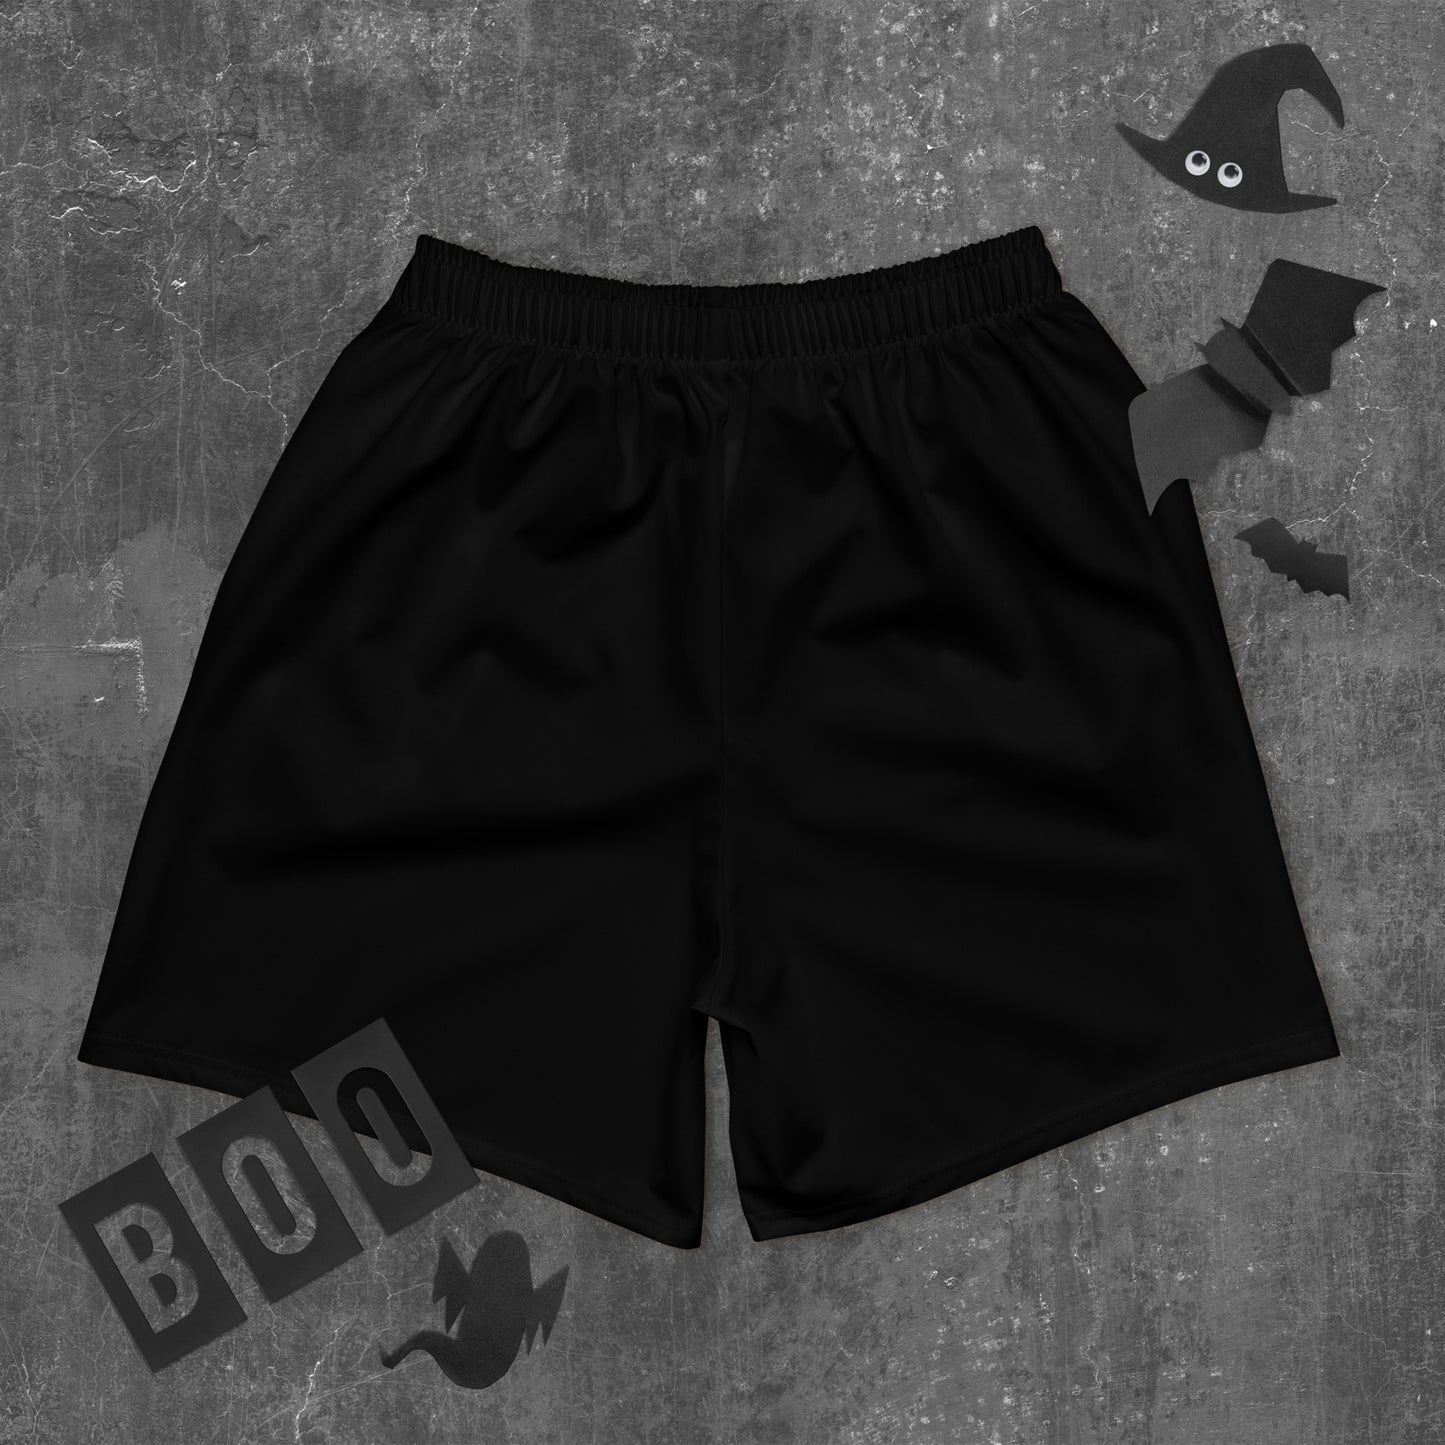 Electro Dong Athletic Shorts